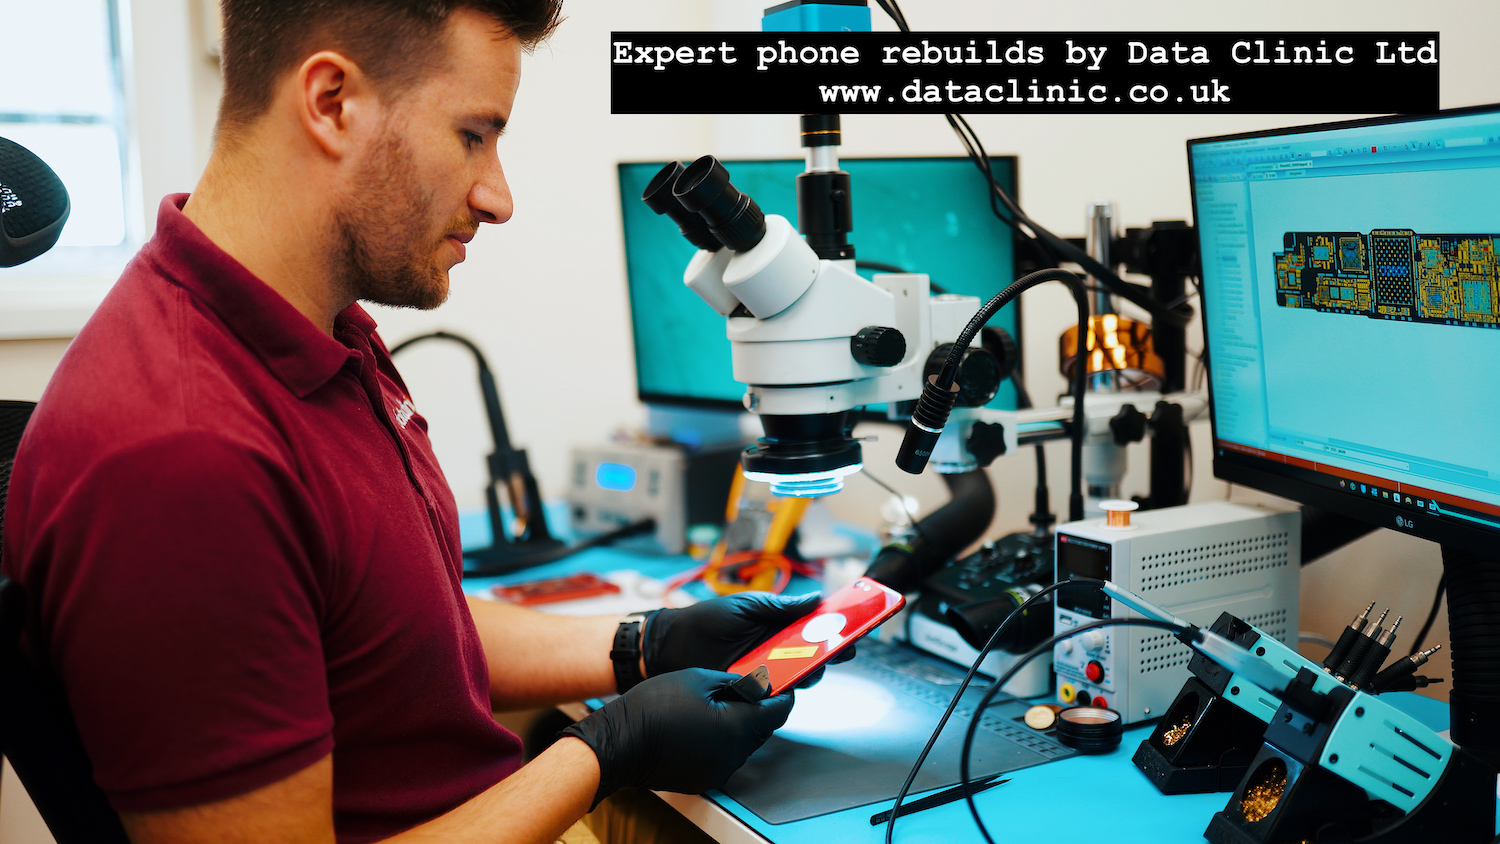 Expert phone rebuild and repair by Data Clinic Ltd